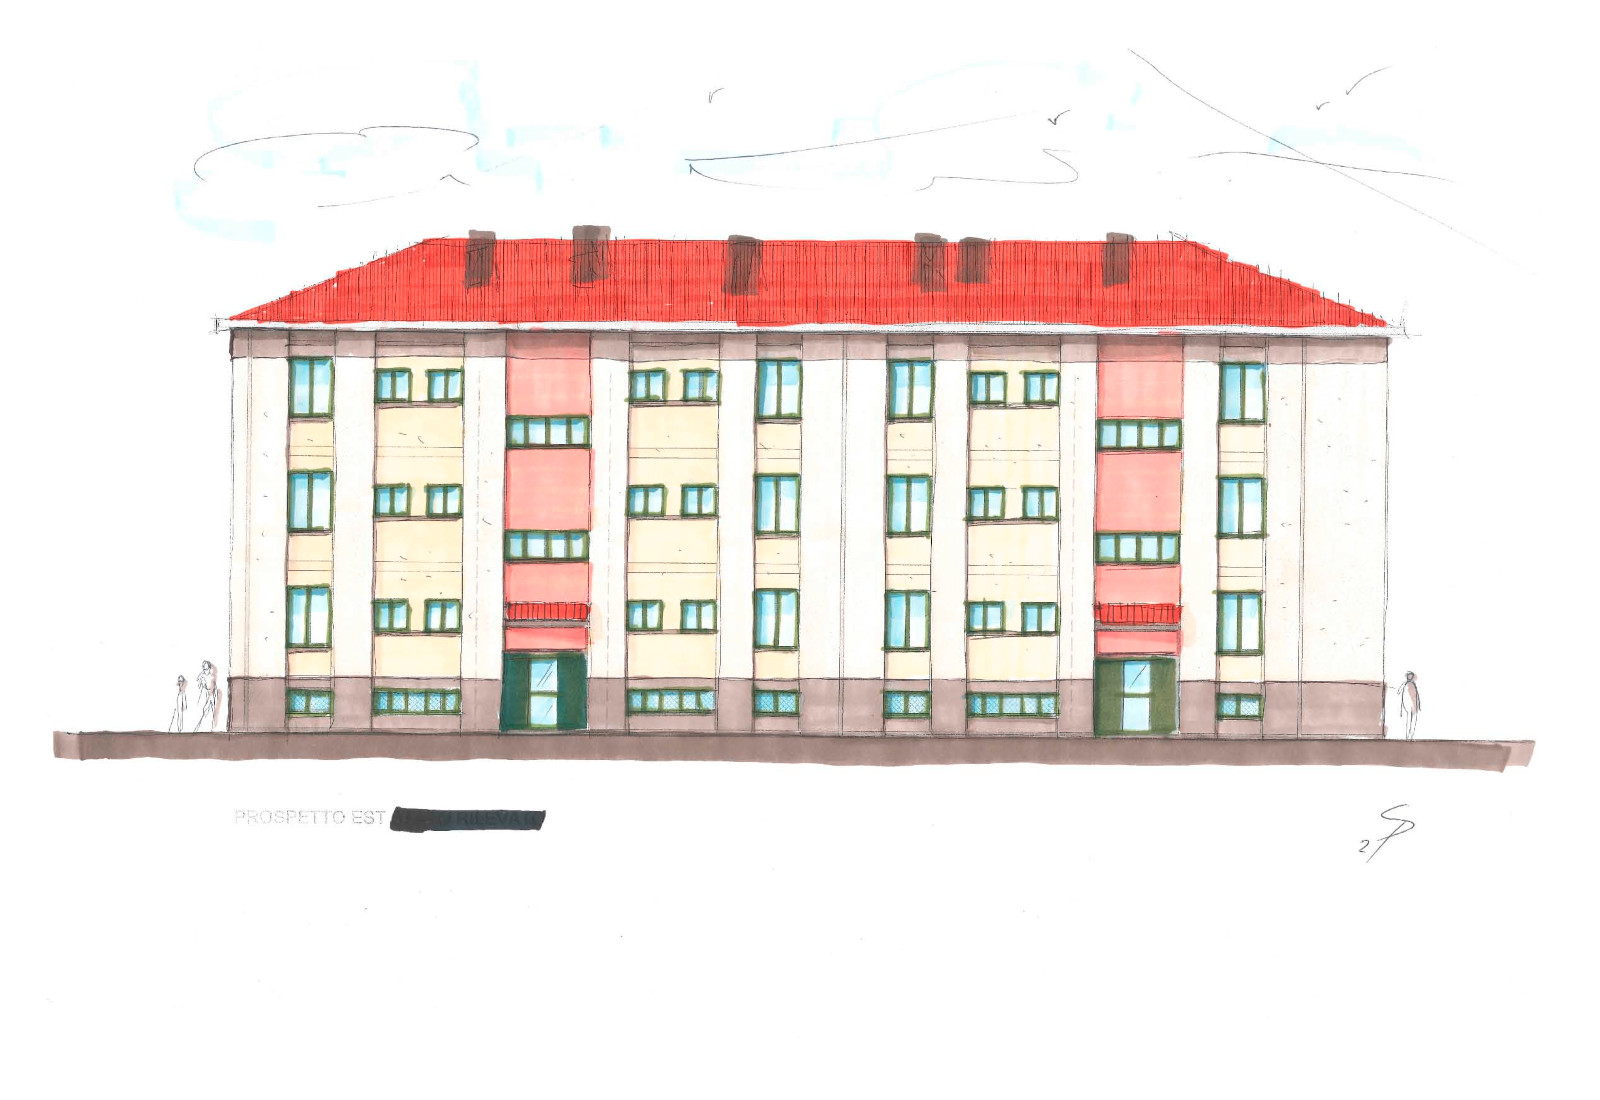 Residential ensemble (energy upgrading), 4 Volta street, Lainate - Street elevation sketch